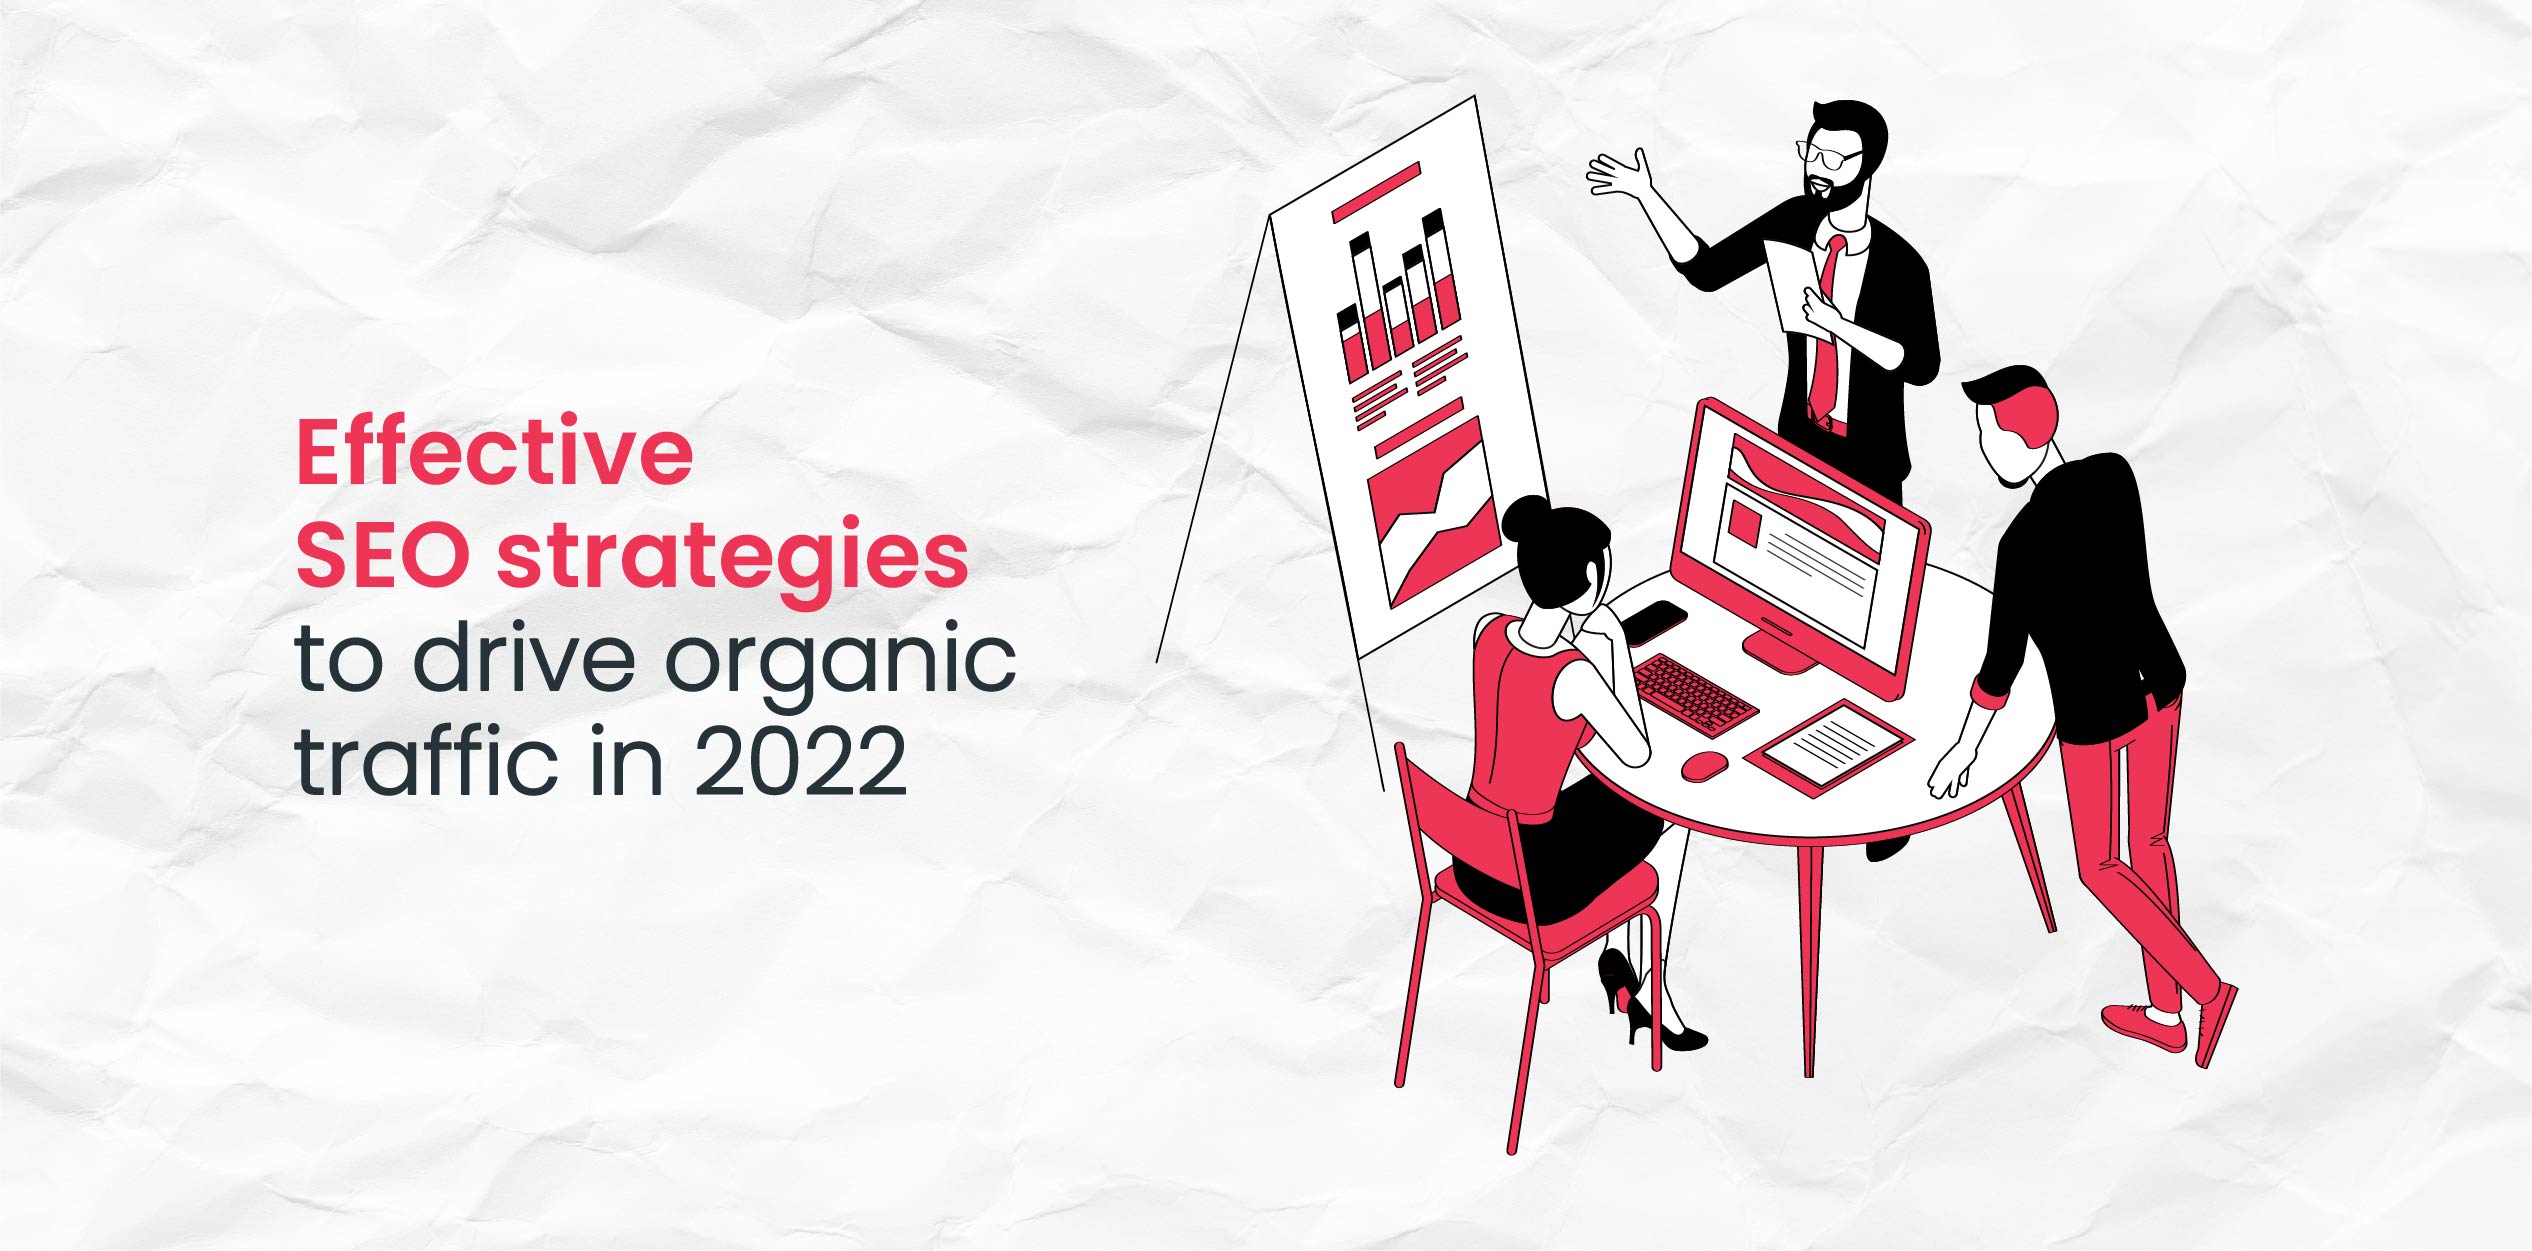 Effective SEO strategies to drive organic traffic in 2022